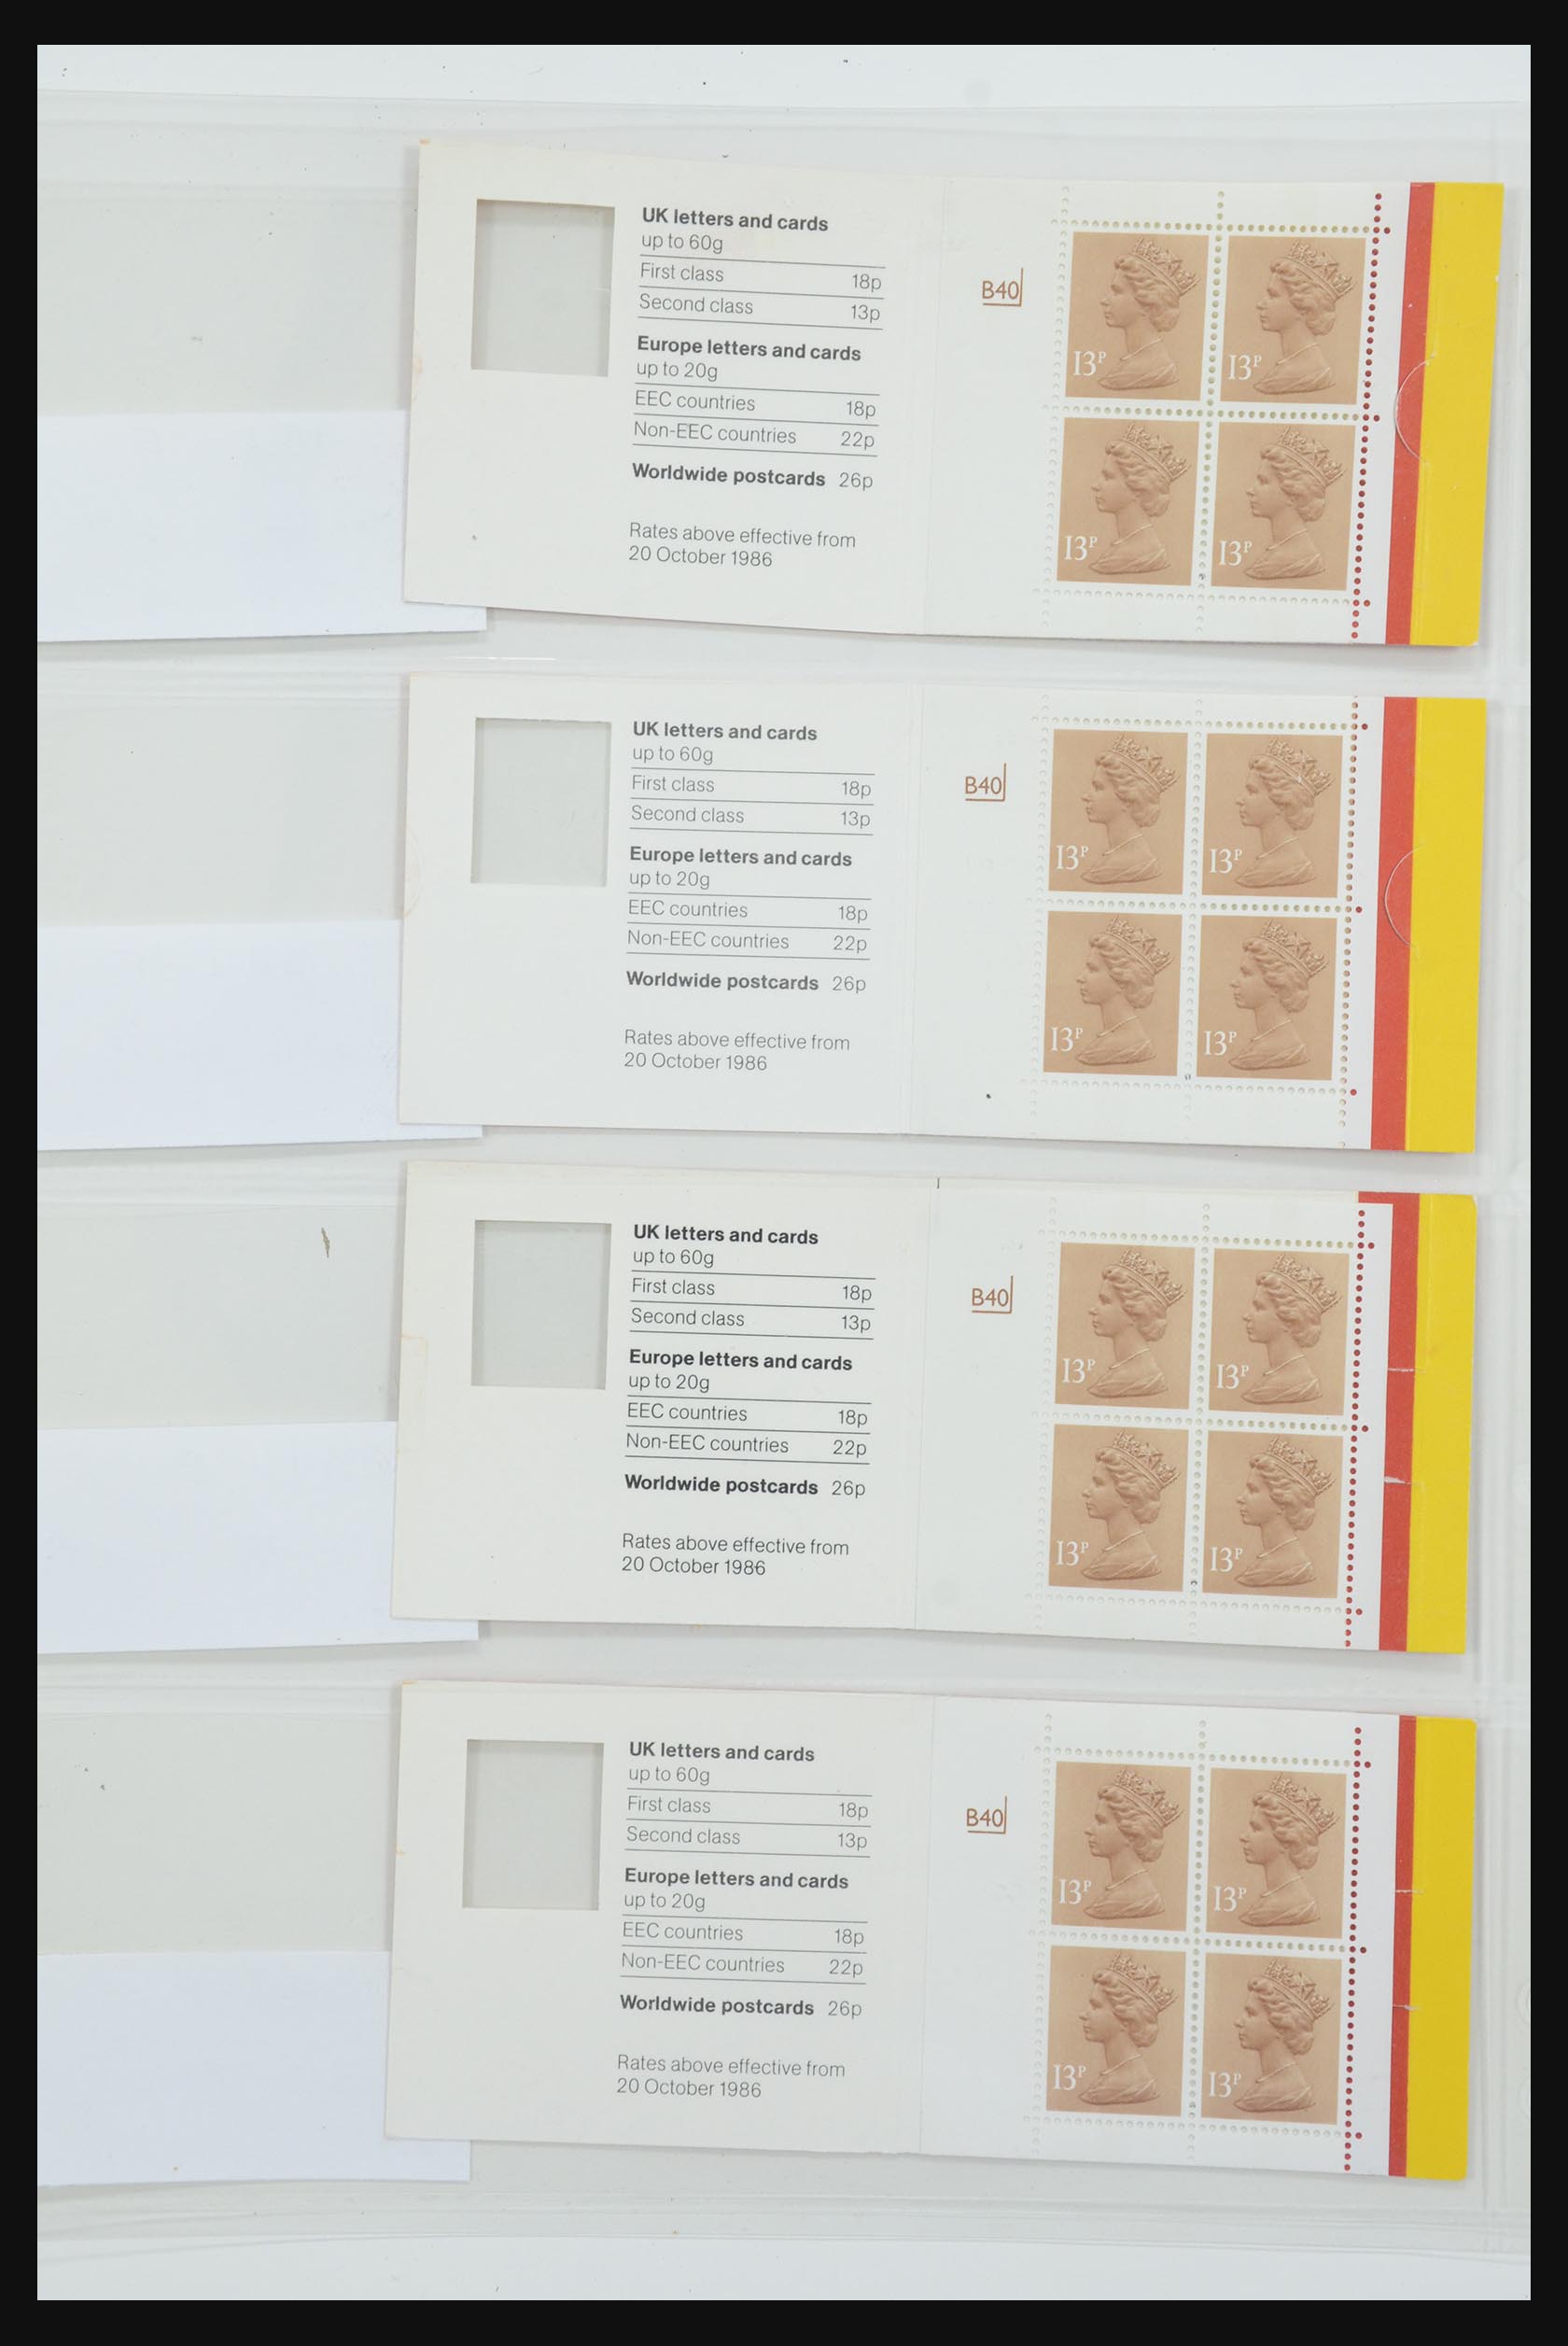 31959 004 - 31959 Great Britain stampbooklets 1987-2016!!